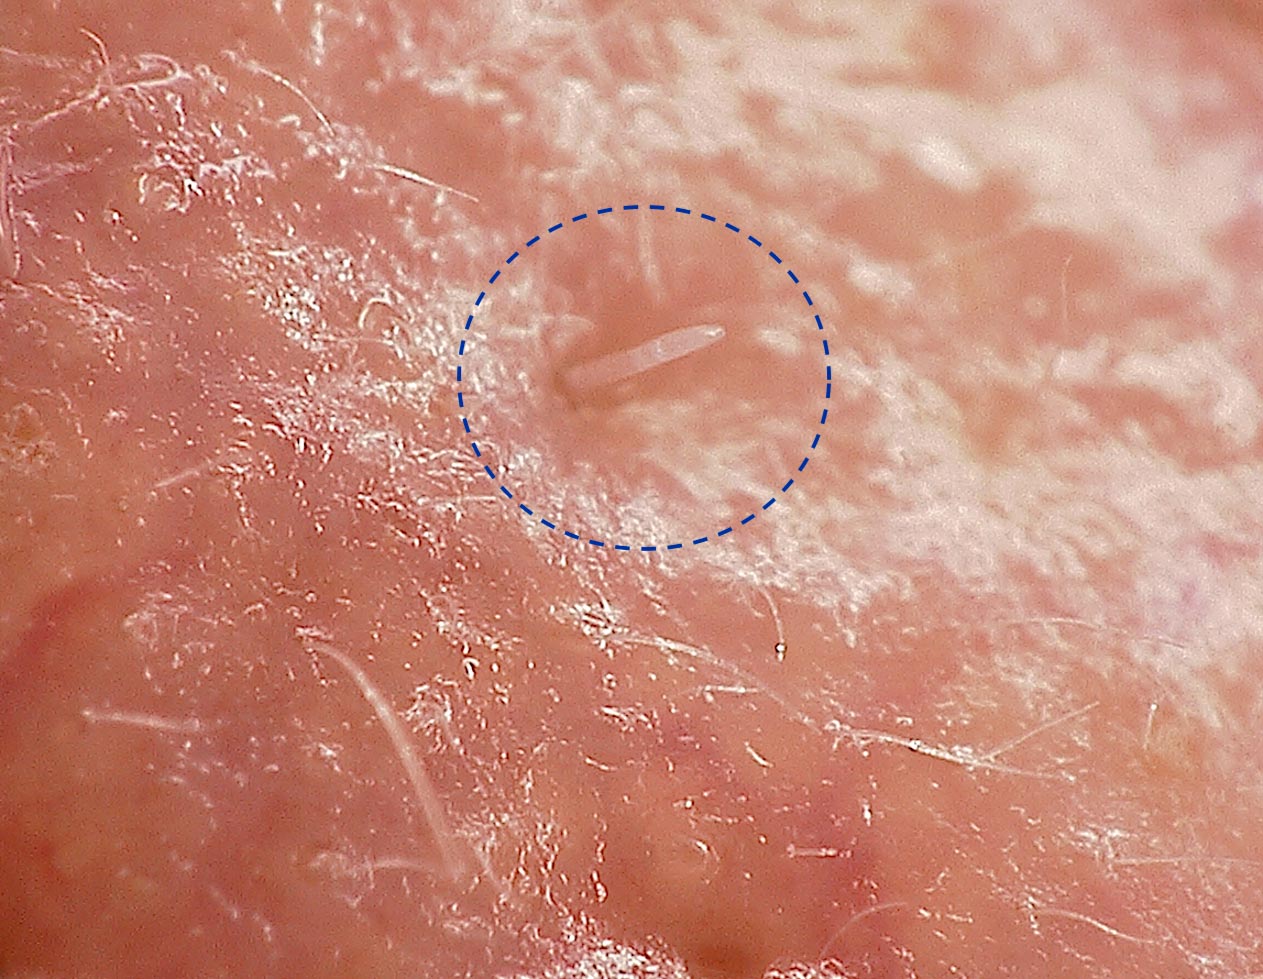 Demodex folliculorum leaks into the skin